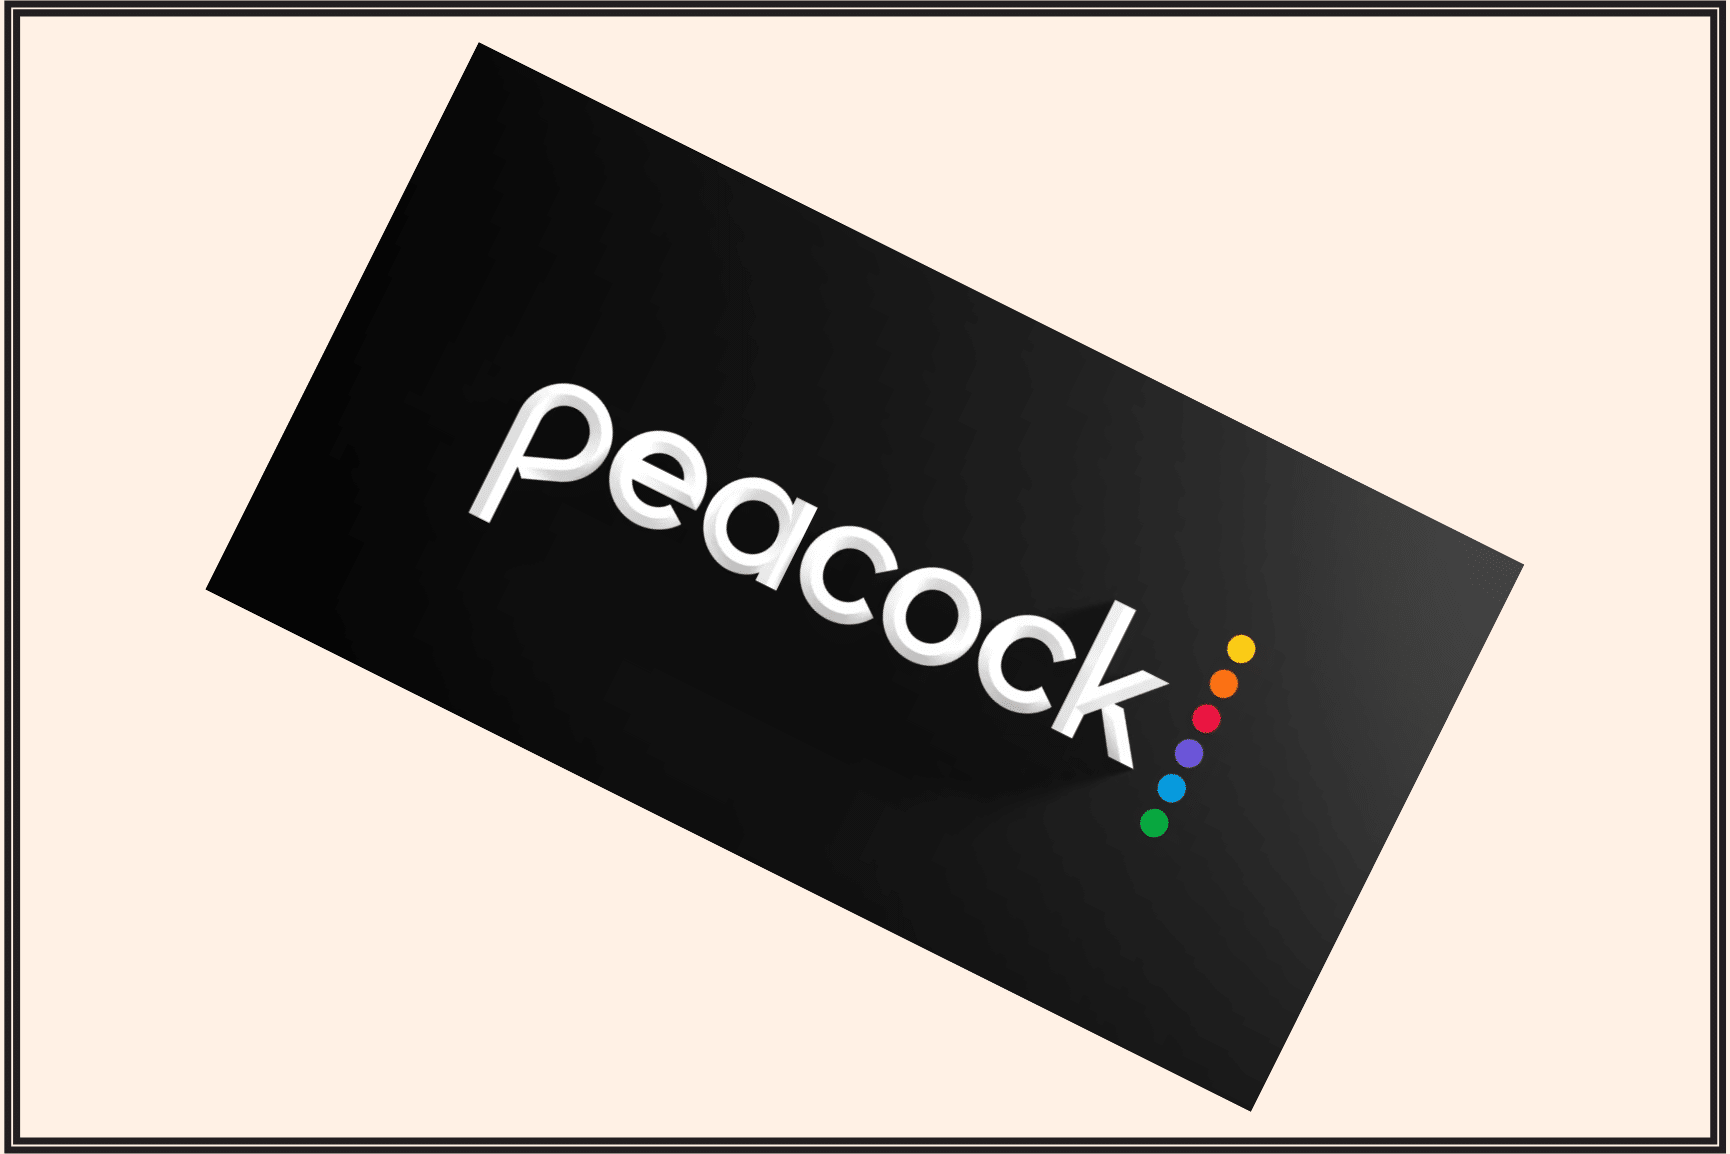 Peacock Military Discount – Get Premium for $2.99